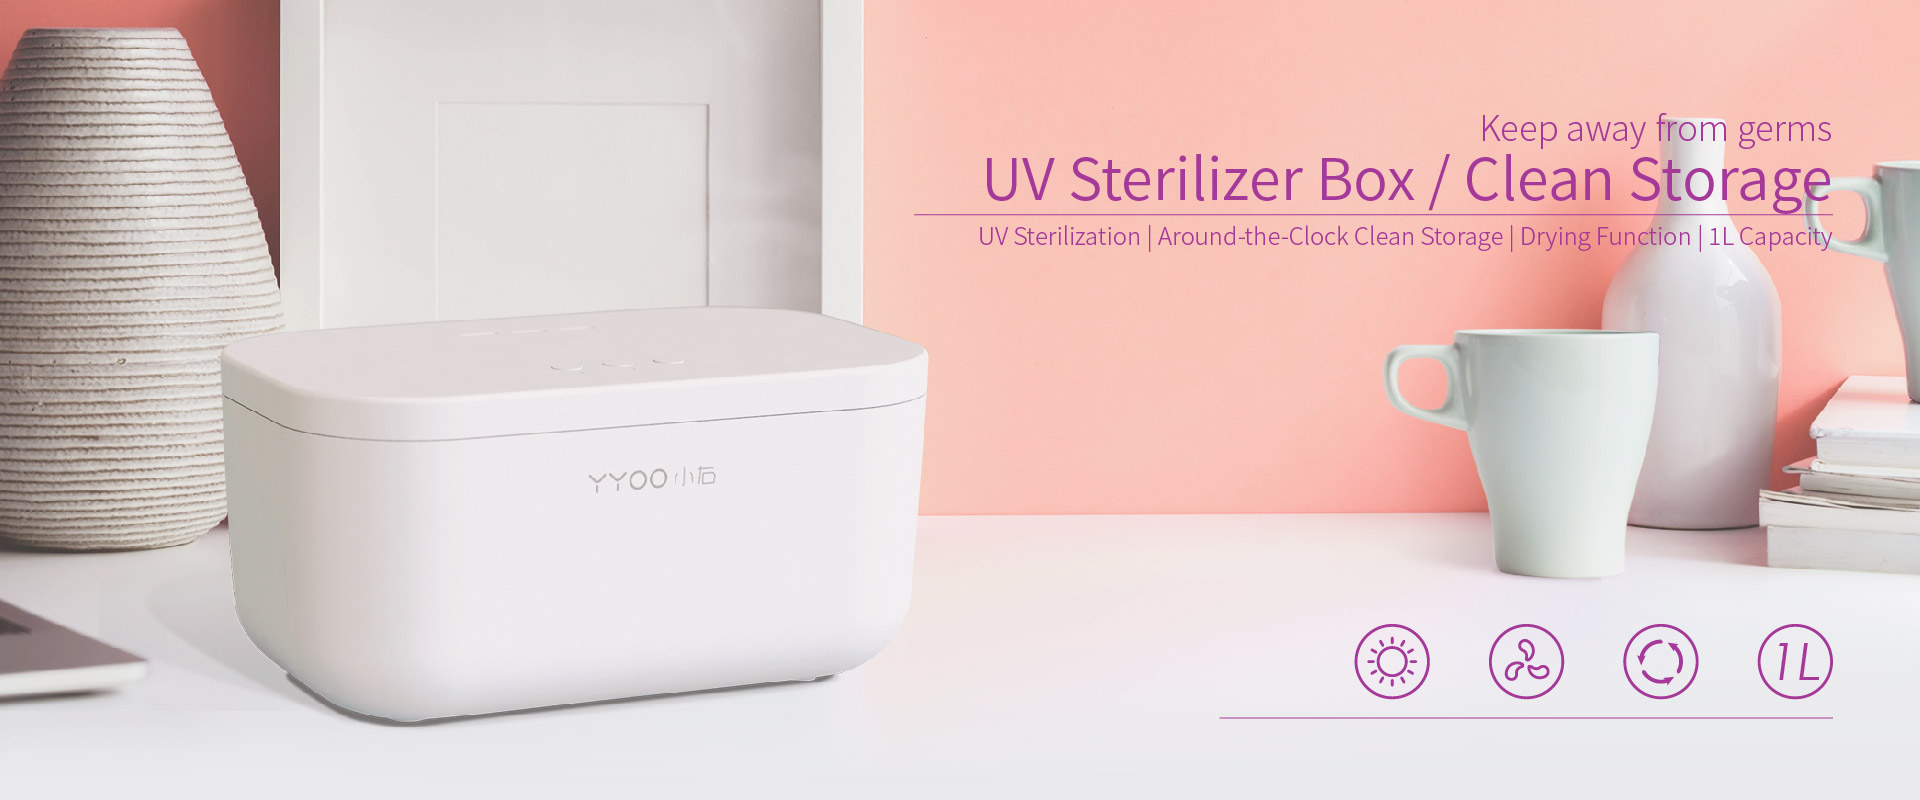 UV bottle Sterilizer Dryer Supplier